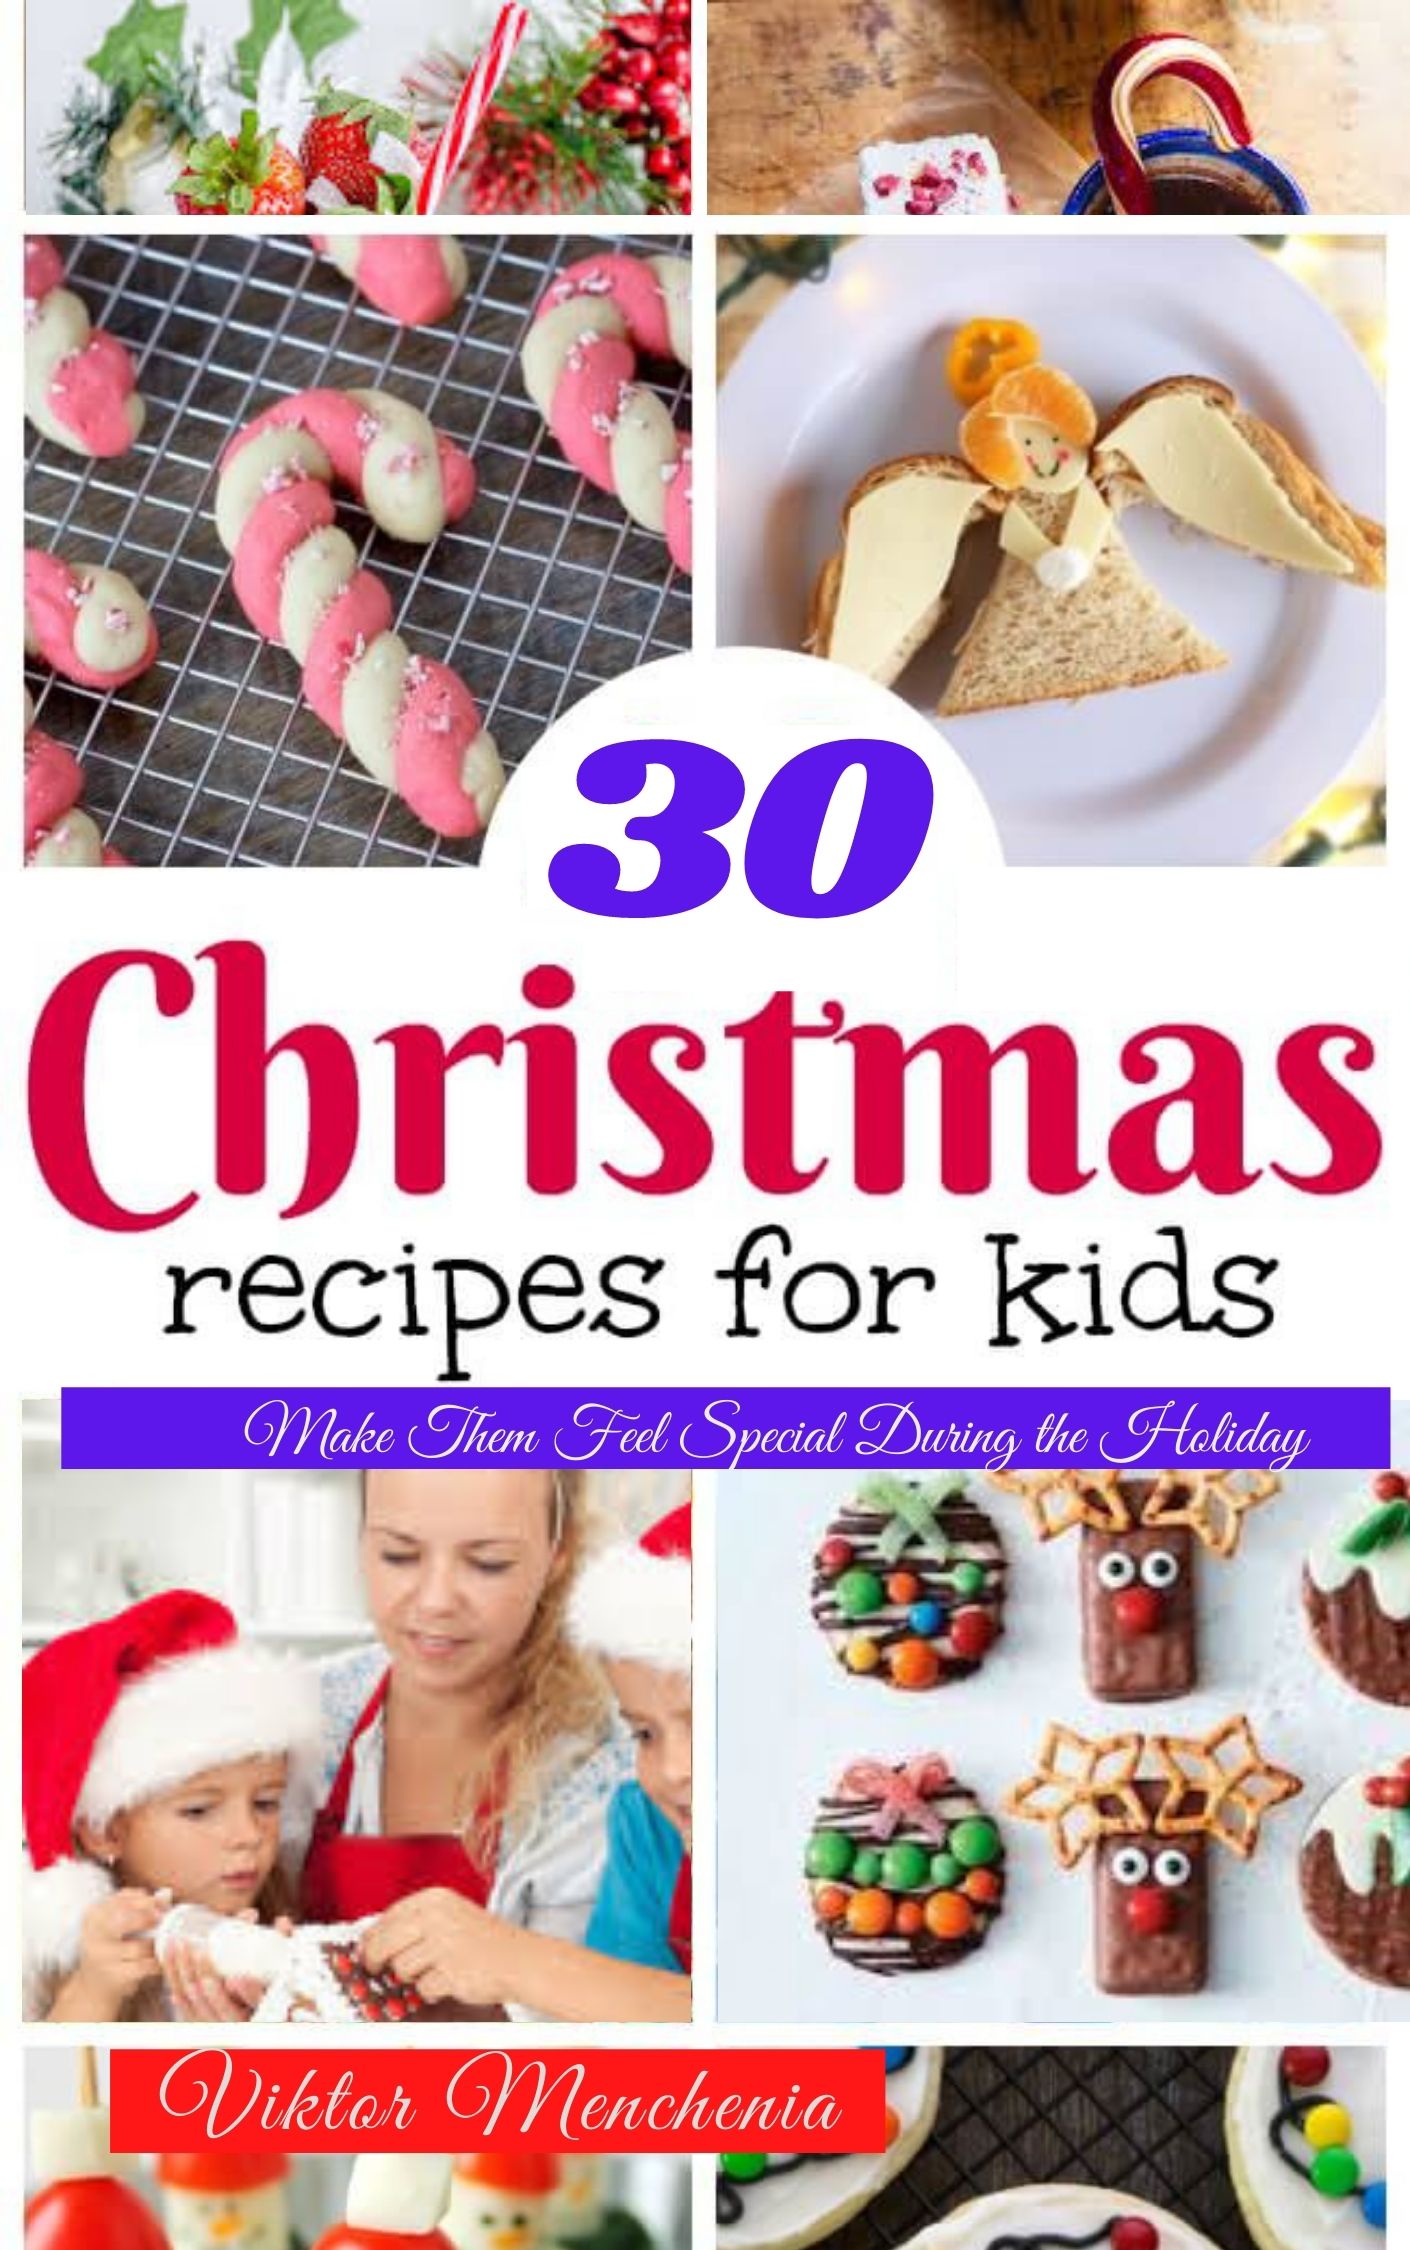 FREE: 30 Christmas Recipes for Kids by Menchenia Viktor